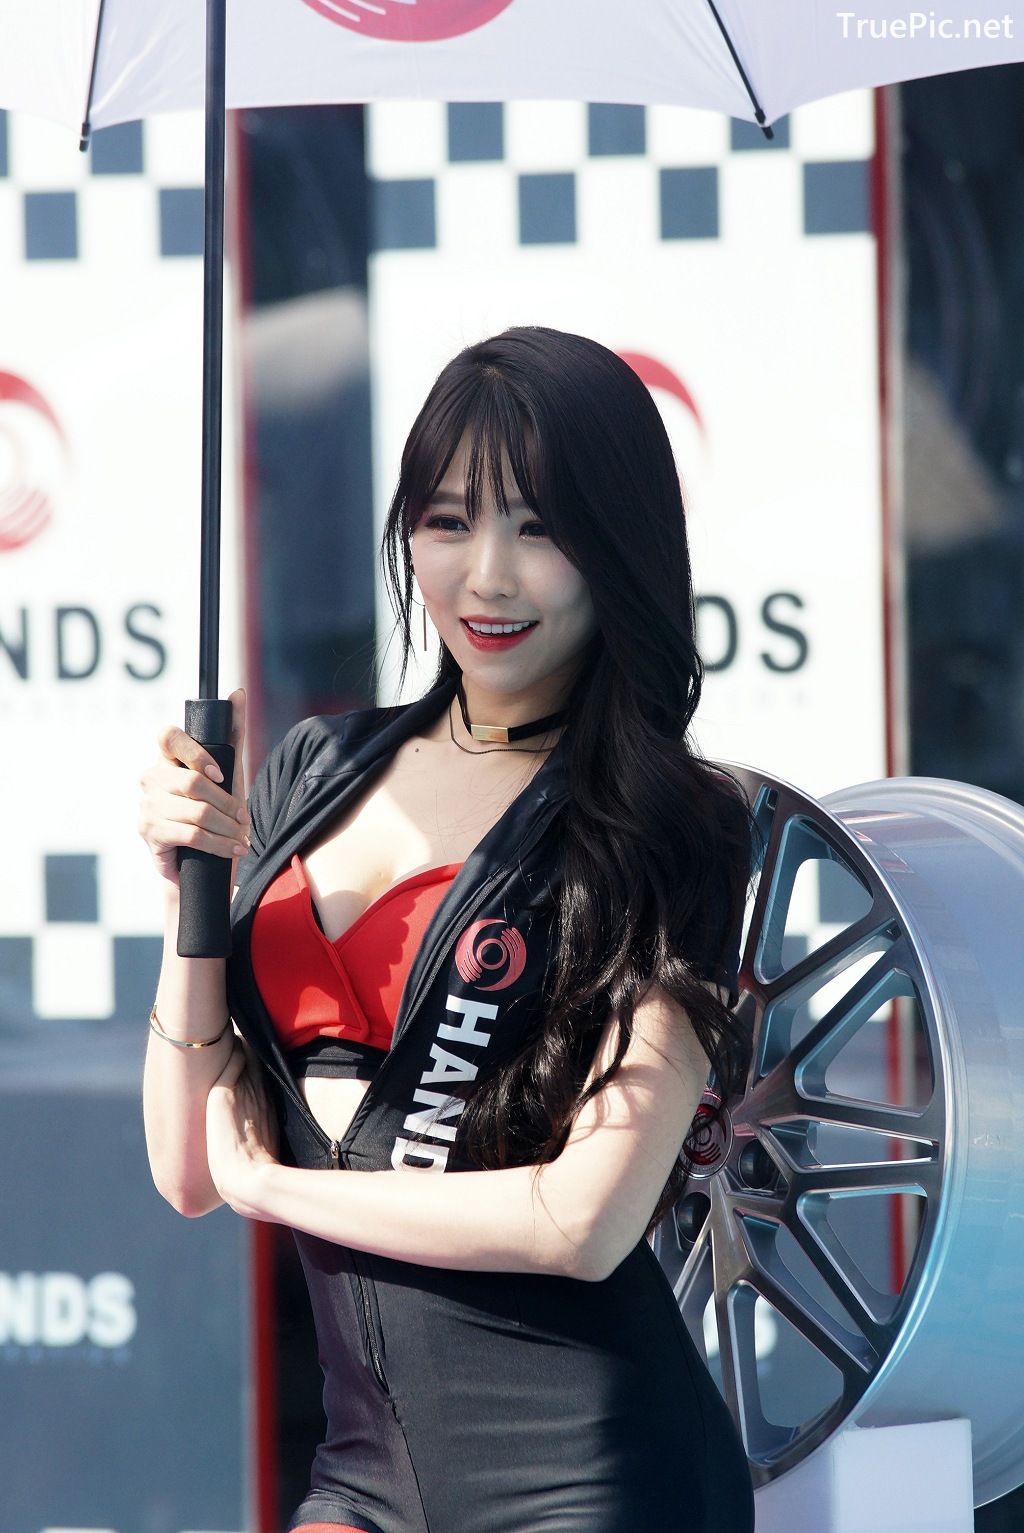 Image-Korean-Racing-Model-Lee-Eun-Hye-At-Incheon-Korea-Tuning-Festival-TruePic.net- Picture-18